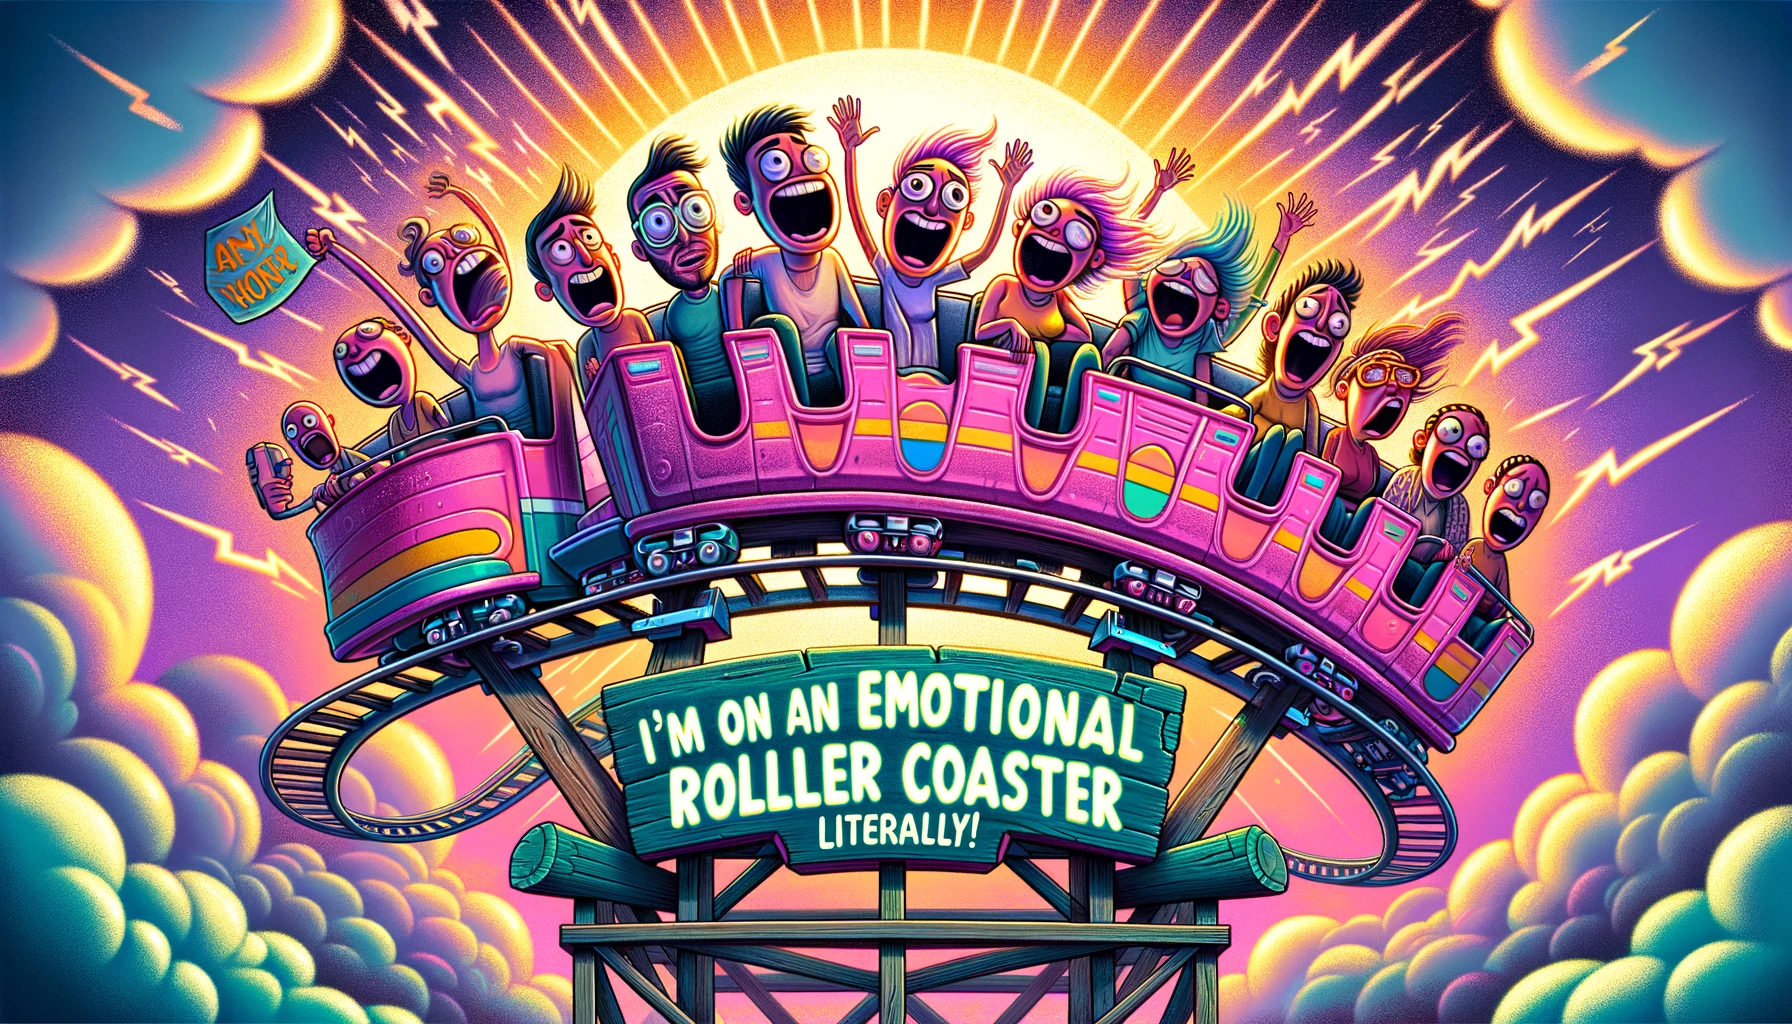 I'm on an emotional roller coaster – literally! - Roller Coaster Pun